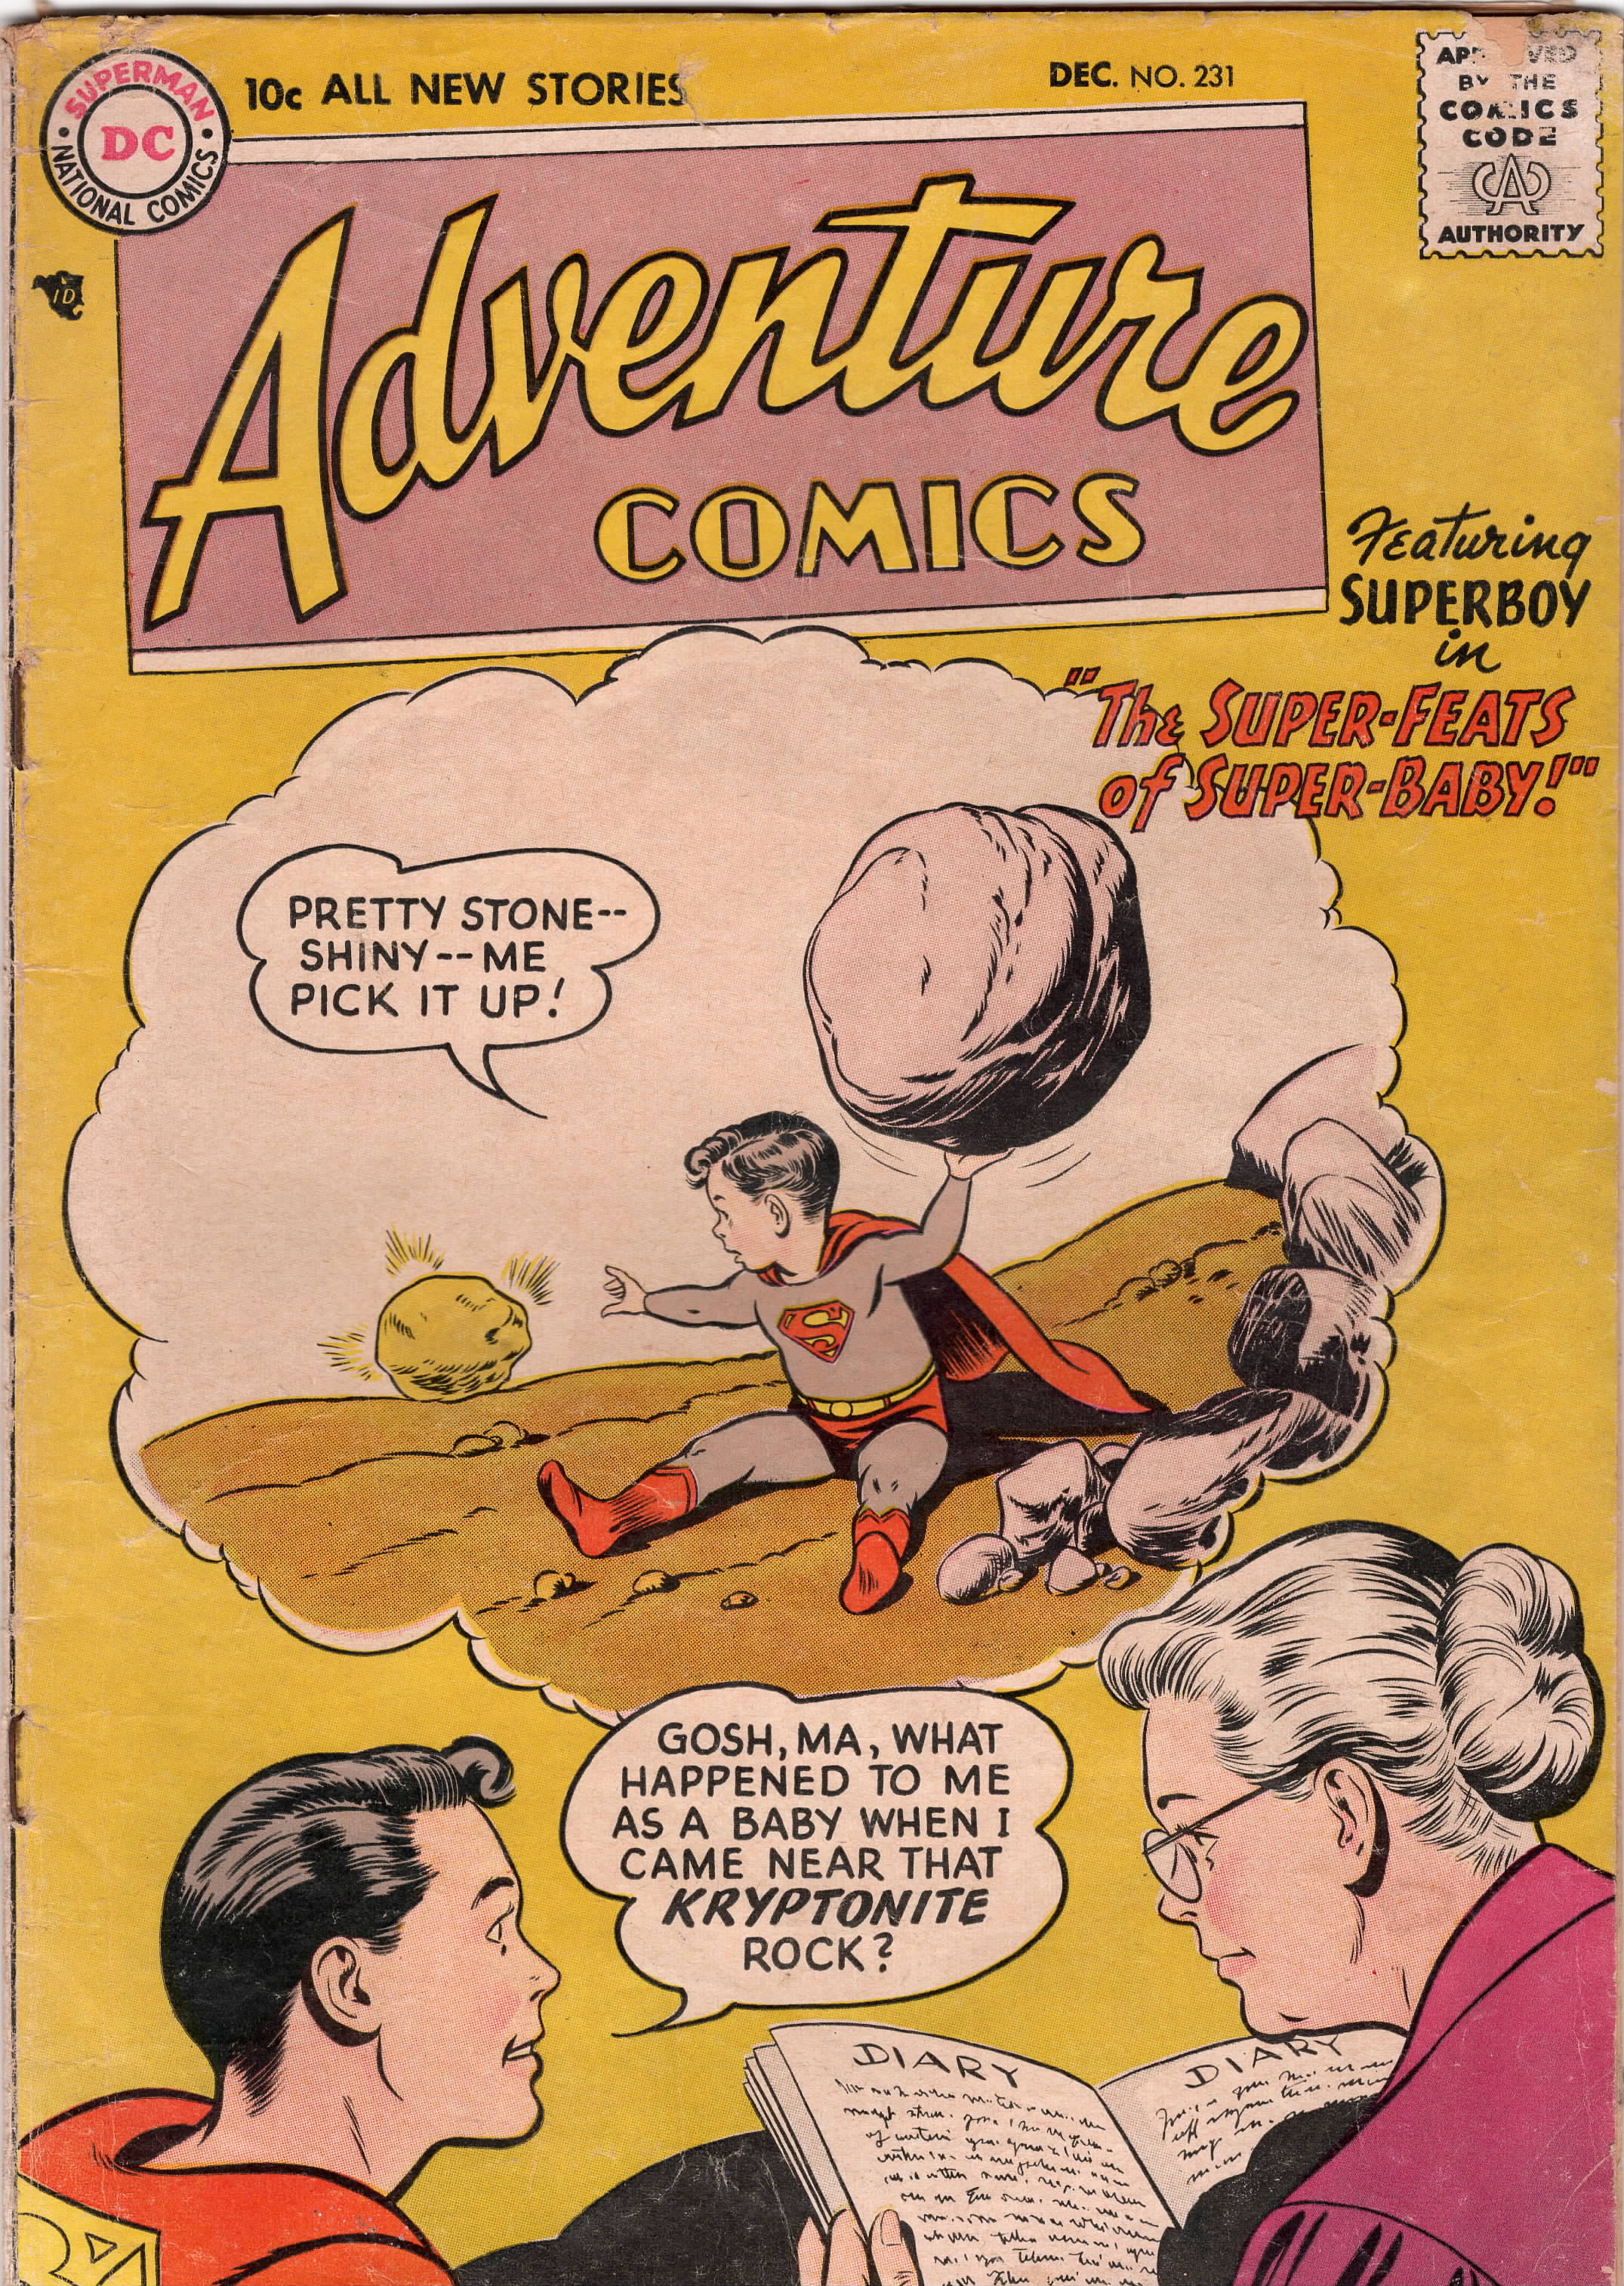 Adventure Comics #231